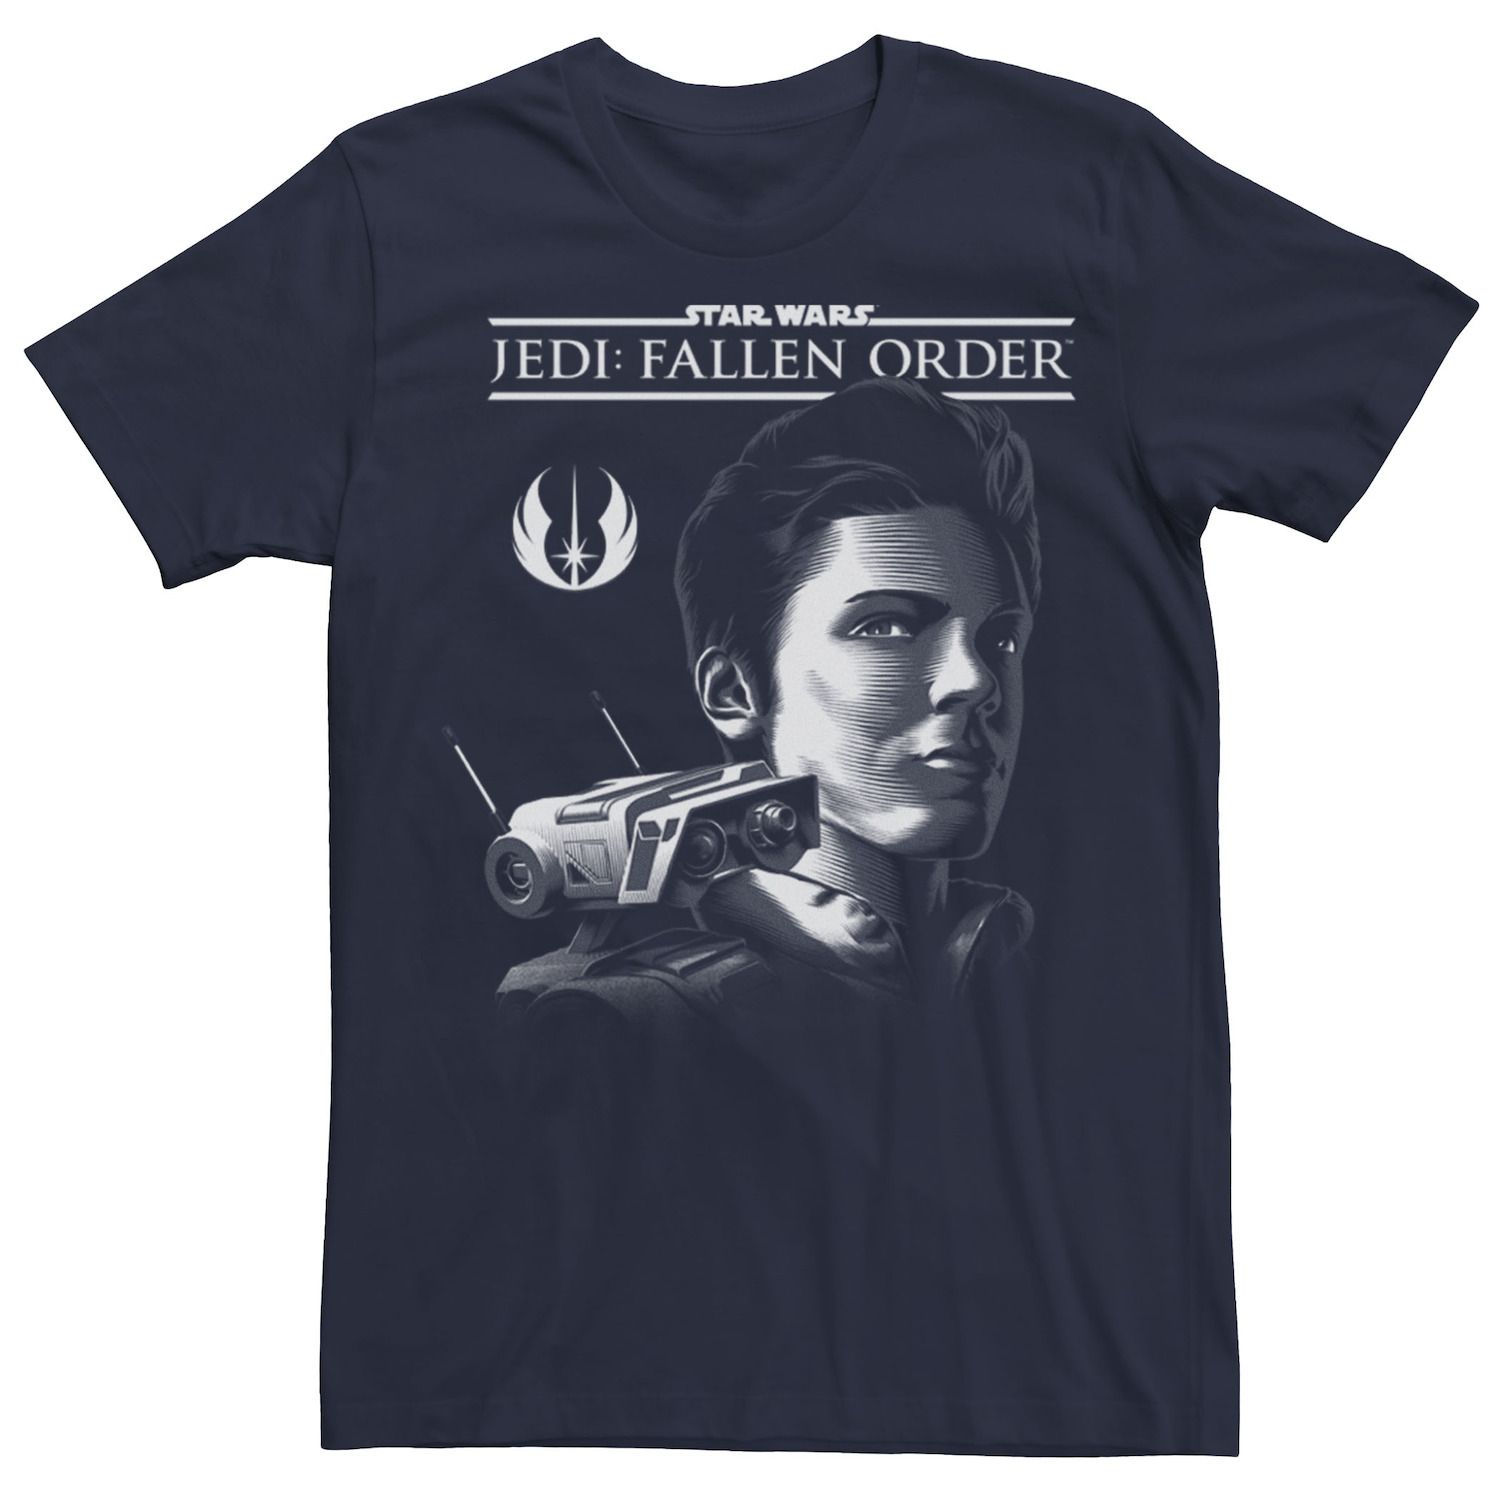 Мужская футболка Jedi Fallen Order Cal Kestis BD-1 с портретом профиля Star Wars